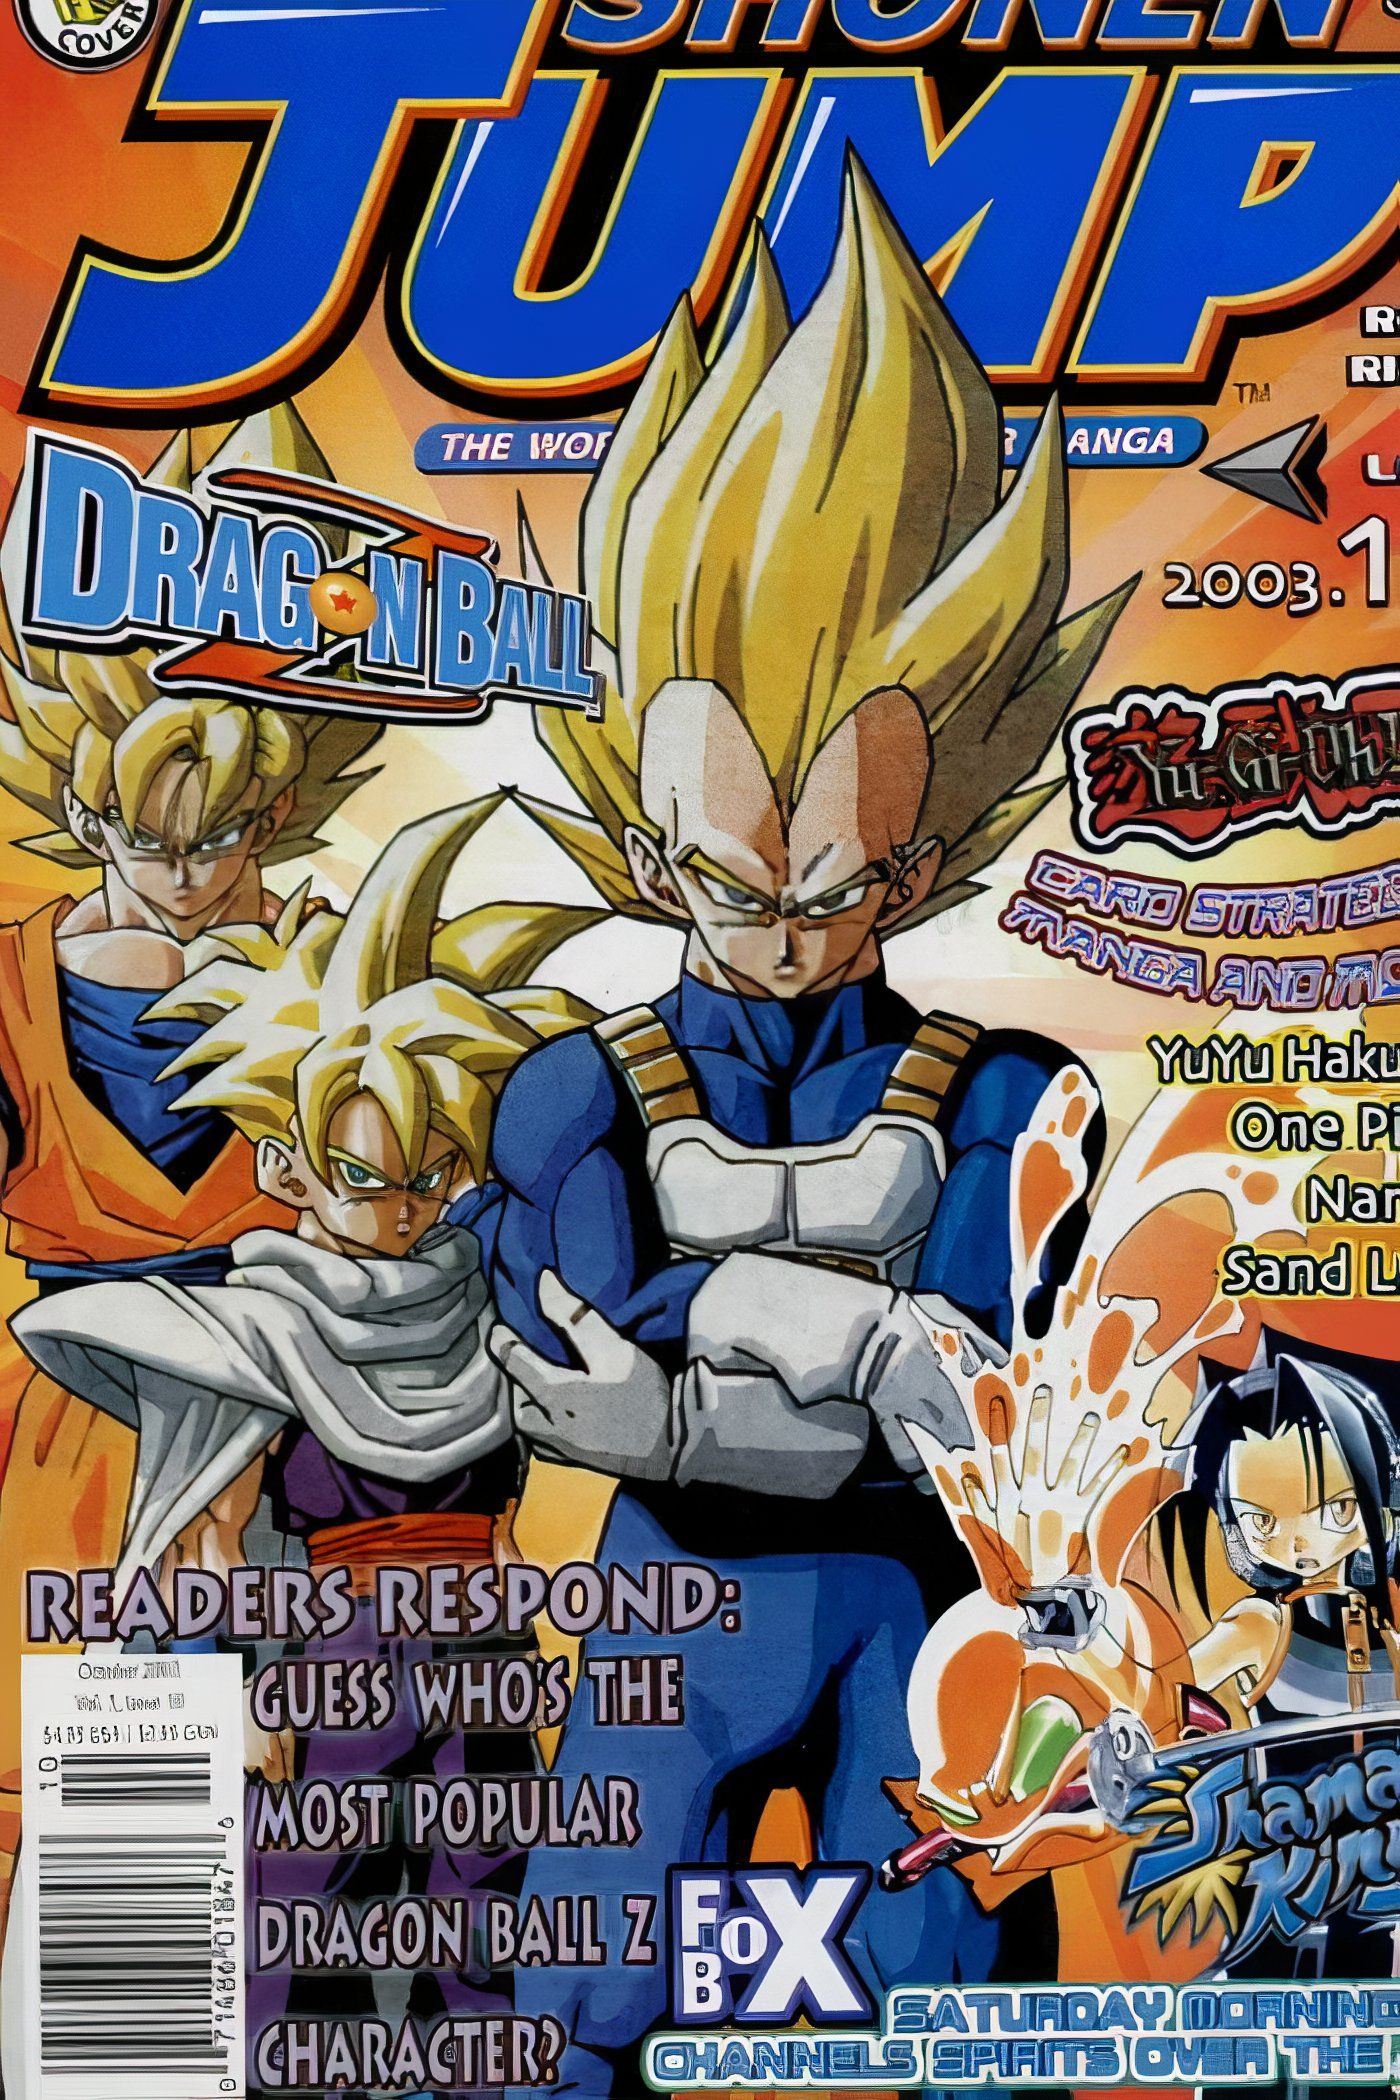 American Weekly Shonen Jump 10 com Super Saiyan Goku, Gohan e Vegeta